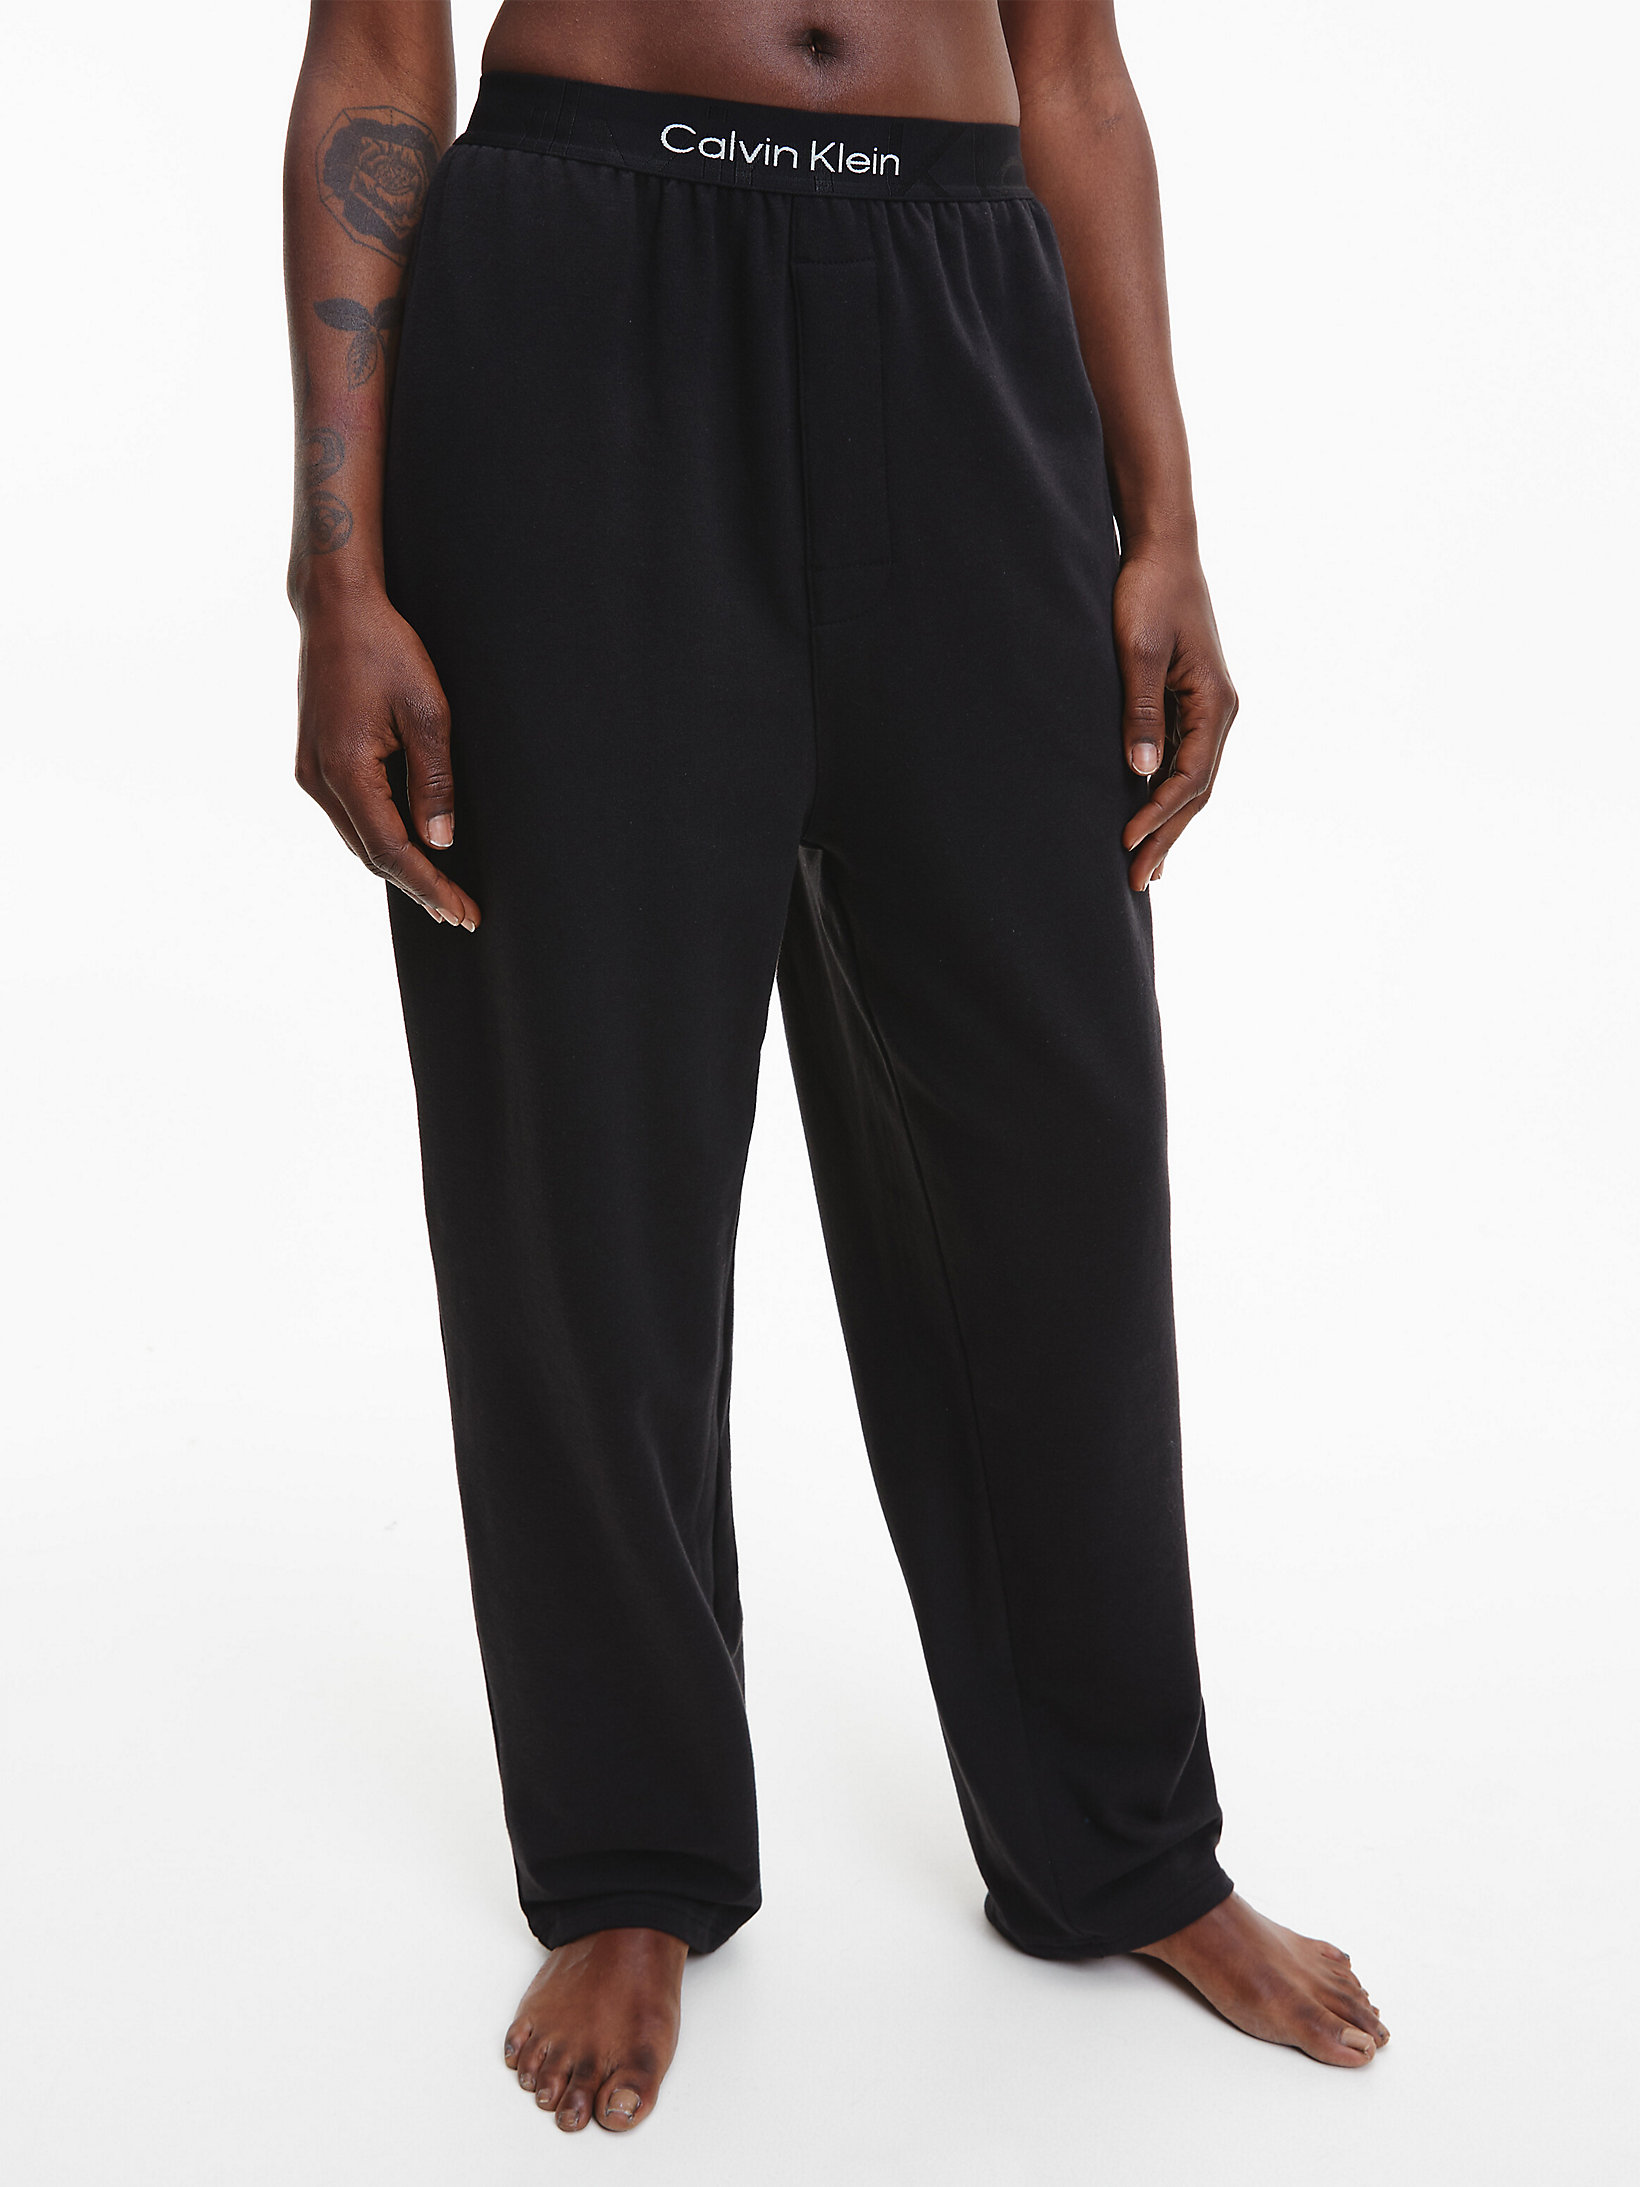 Black > Spodnie Od Piżamy - Embossed Icon > undefined Kobiety - Calvin Klein